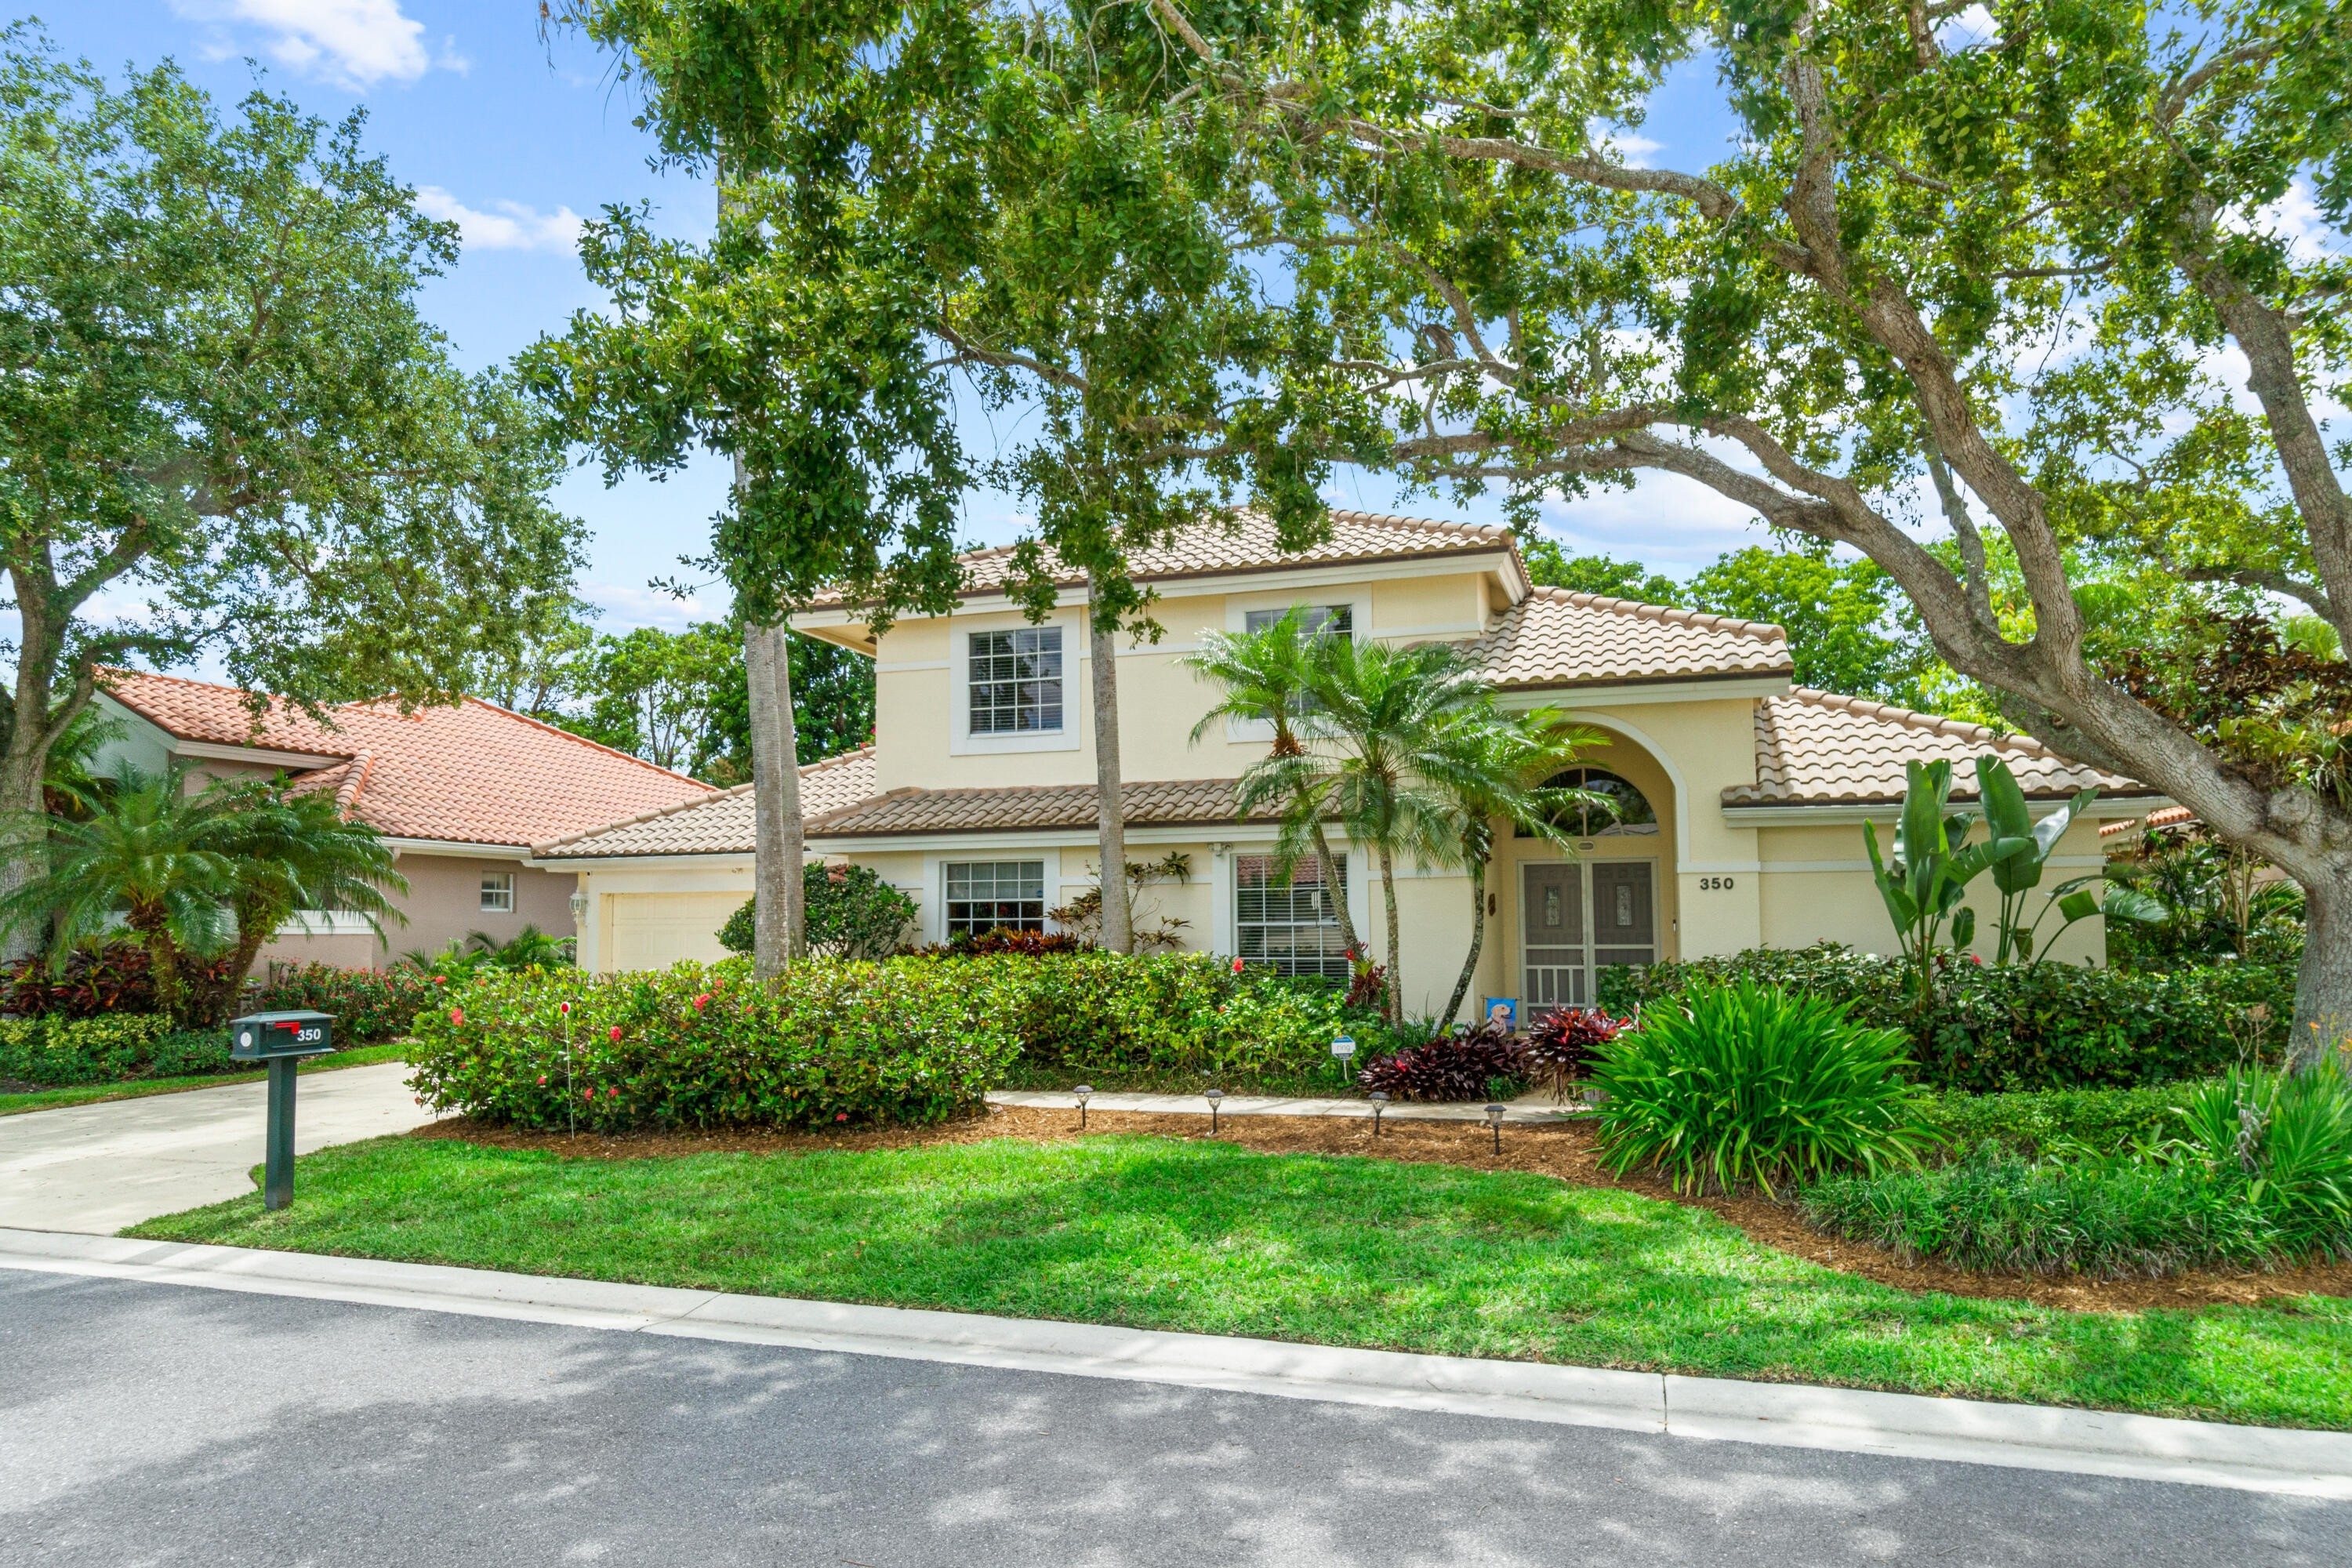 Single Family Home for Sale at Pga National, Palm Beach Gardens, FL 33418